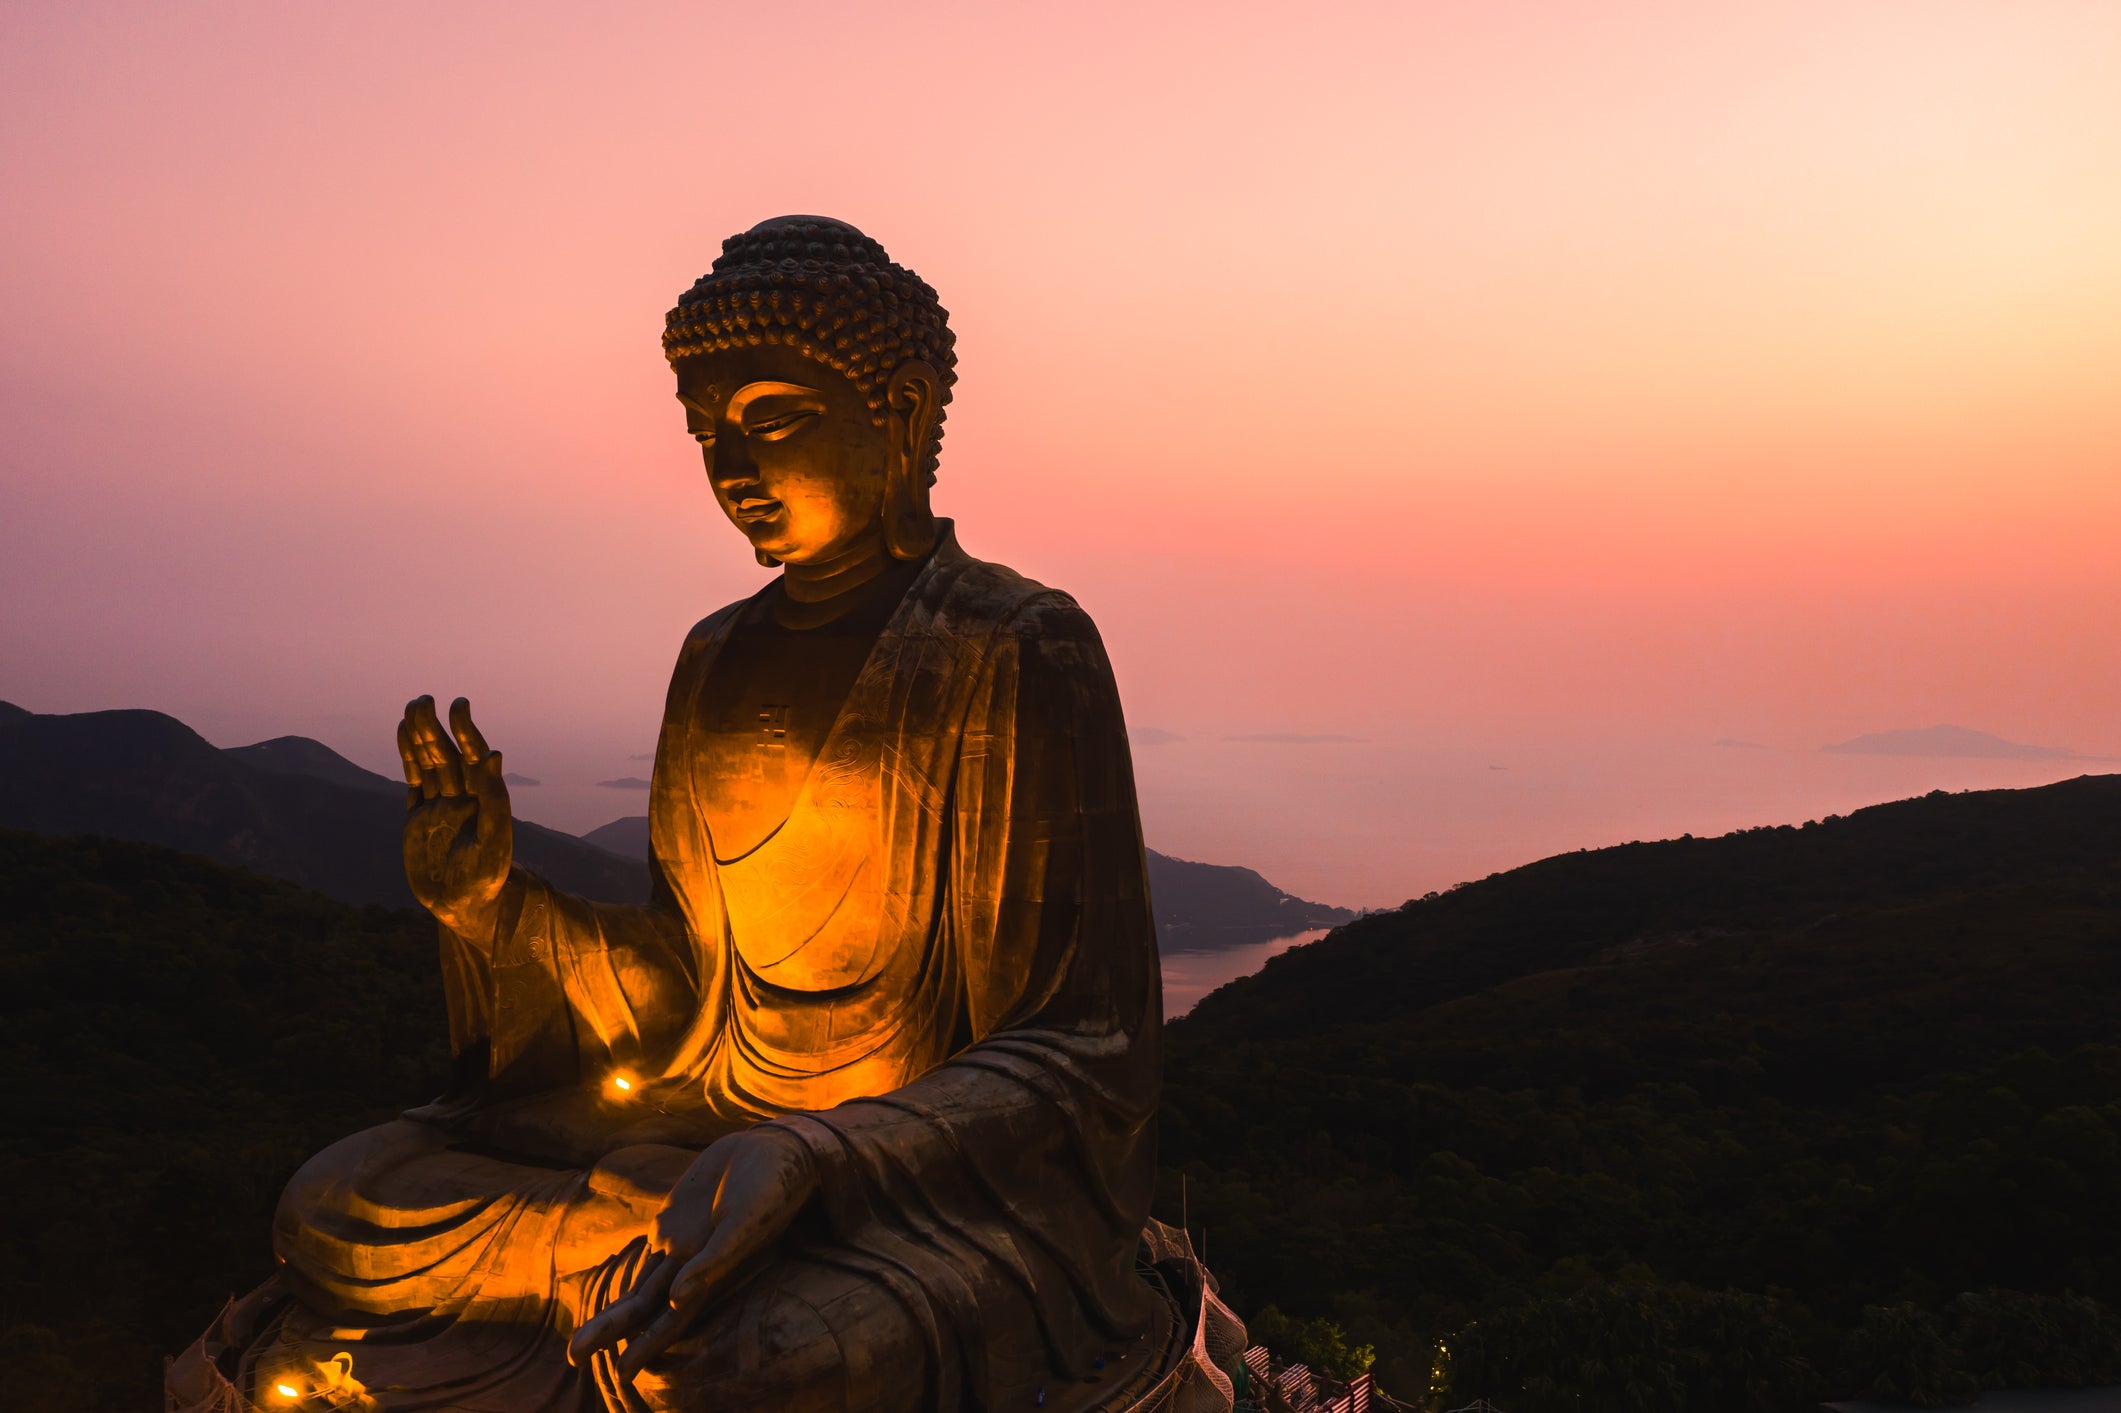 The Big Buddha on Hong Kong’s Lantau island is made from 250 tonnes of bronze